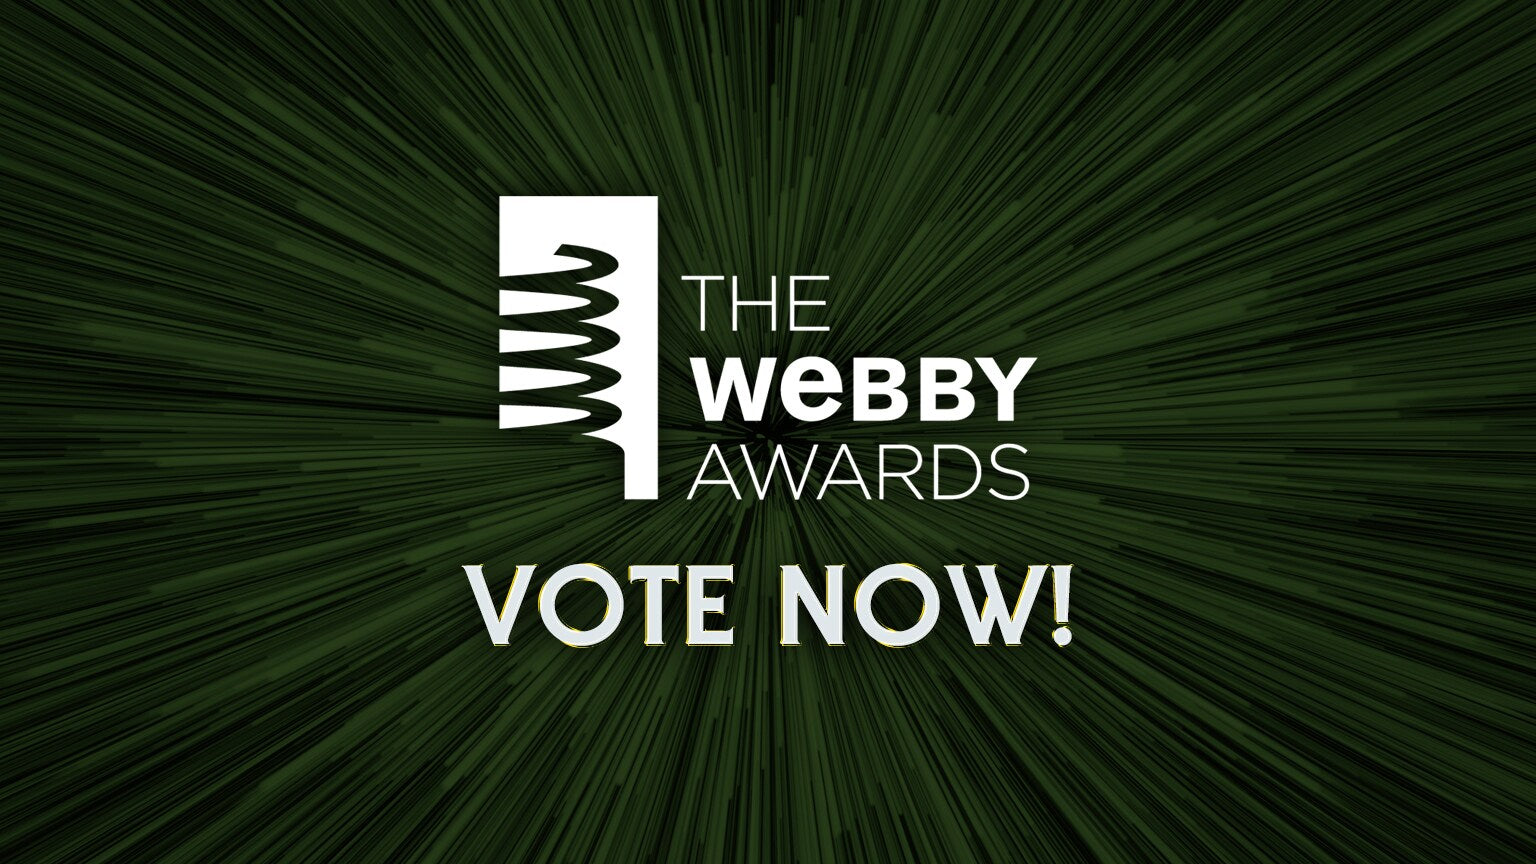 Black Entrepreneur's Day Nominated for 3rd Webby Award Help Us Bring